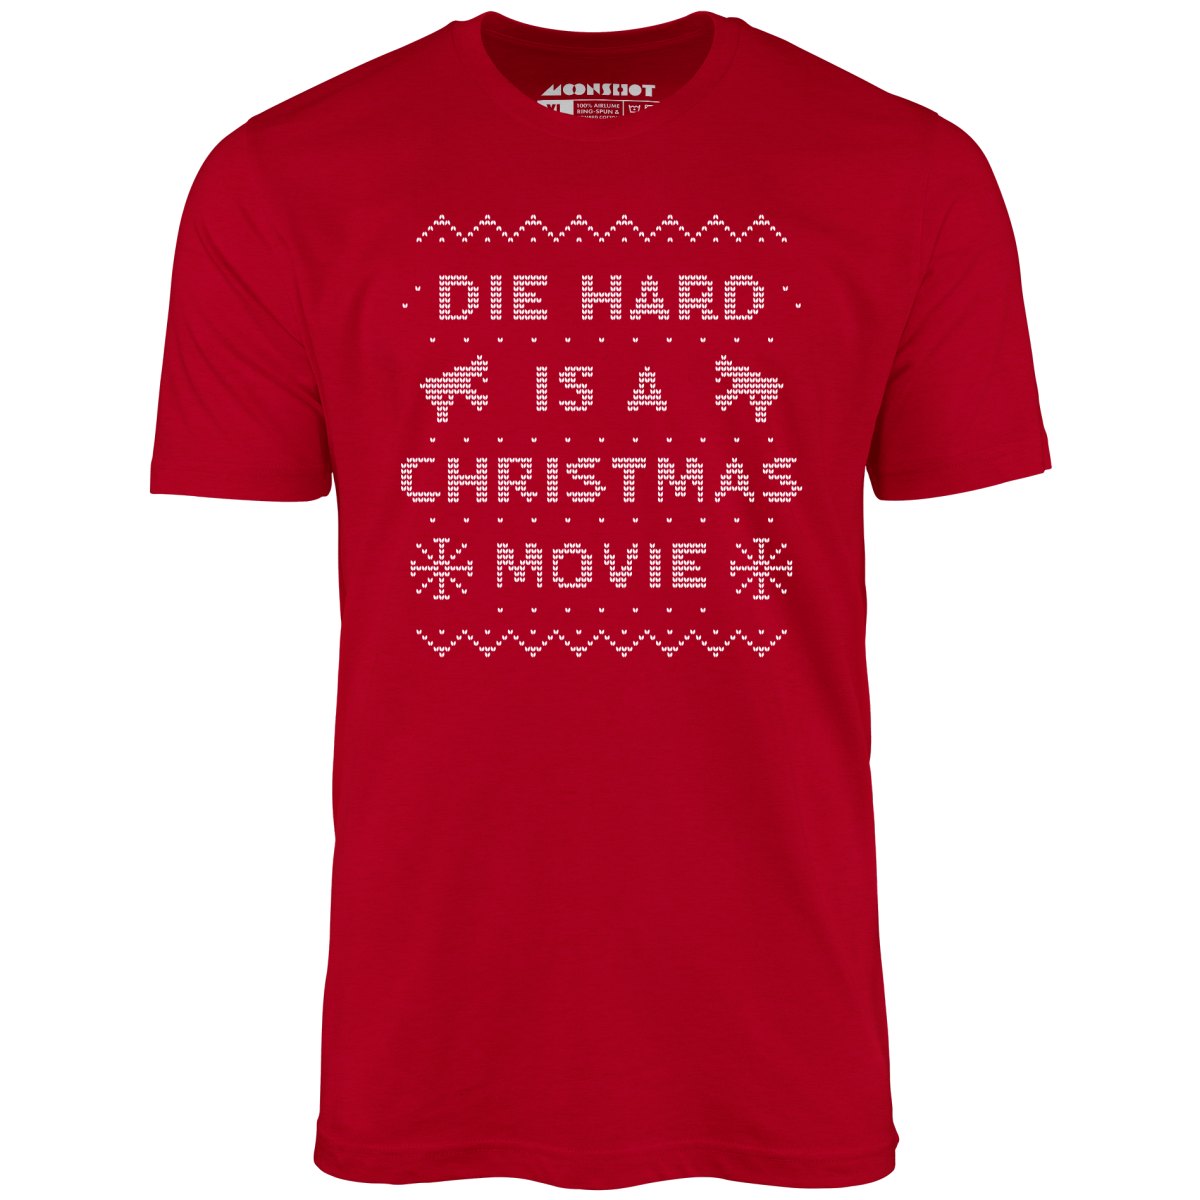 Movie t-shirts